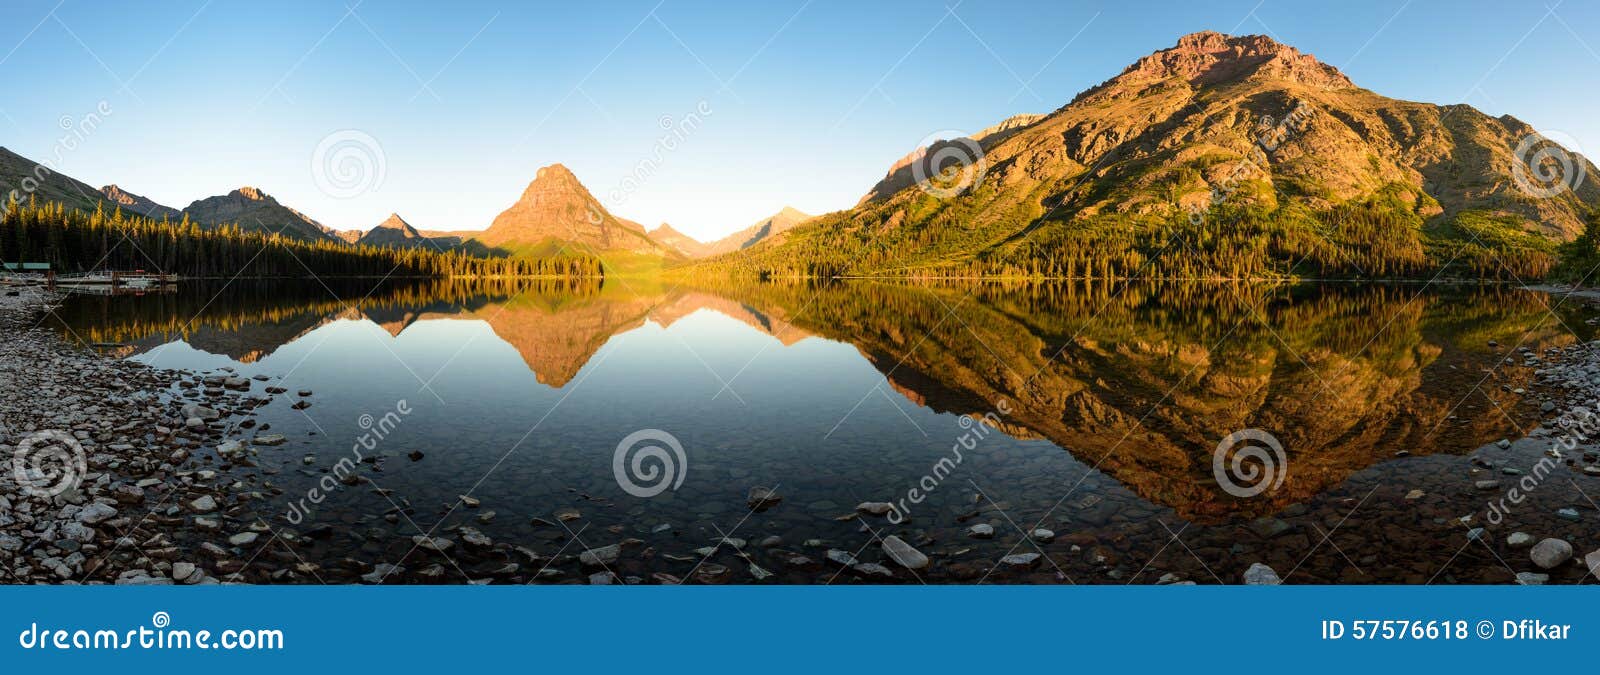 two medicine lake sunrise panorama